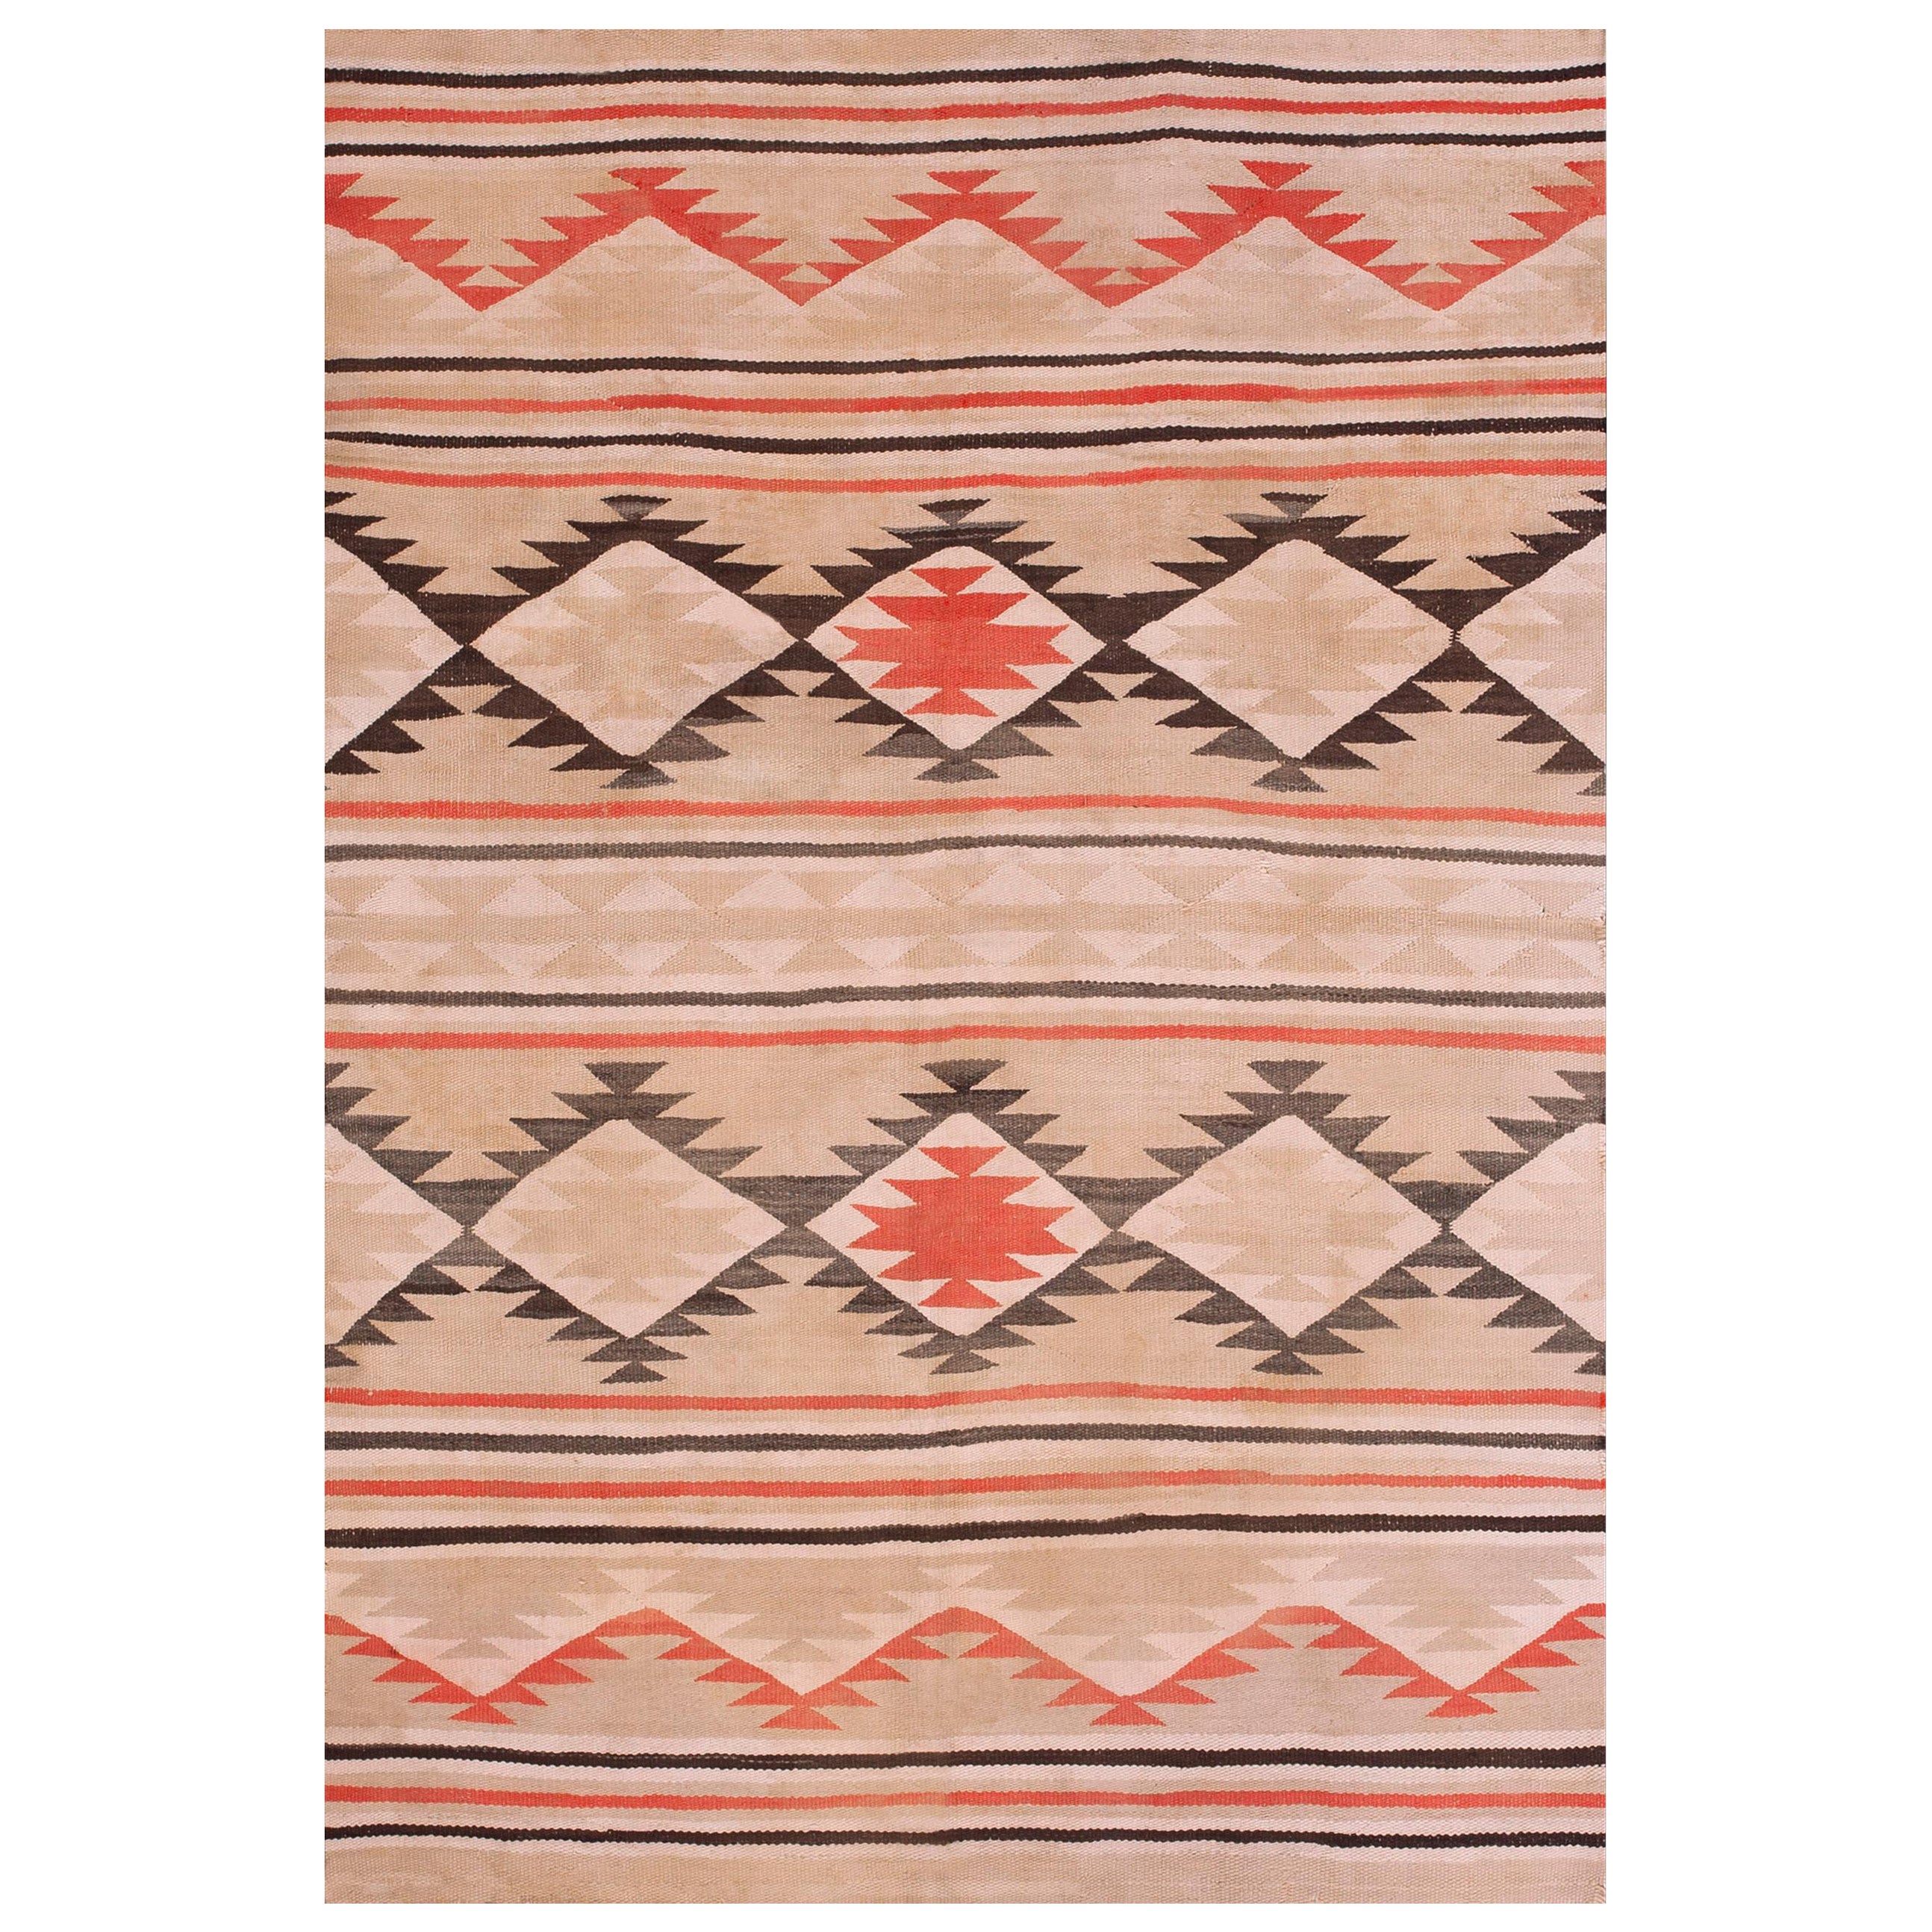 1930s American Navajo Carpet ( 4'2" x 6' - 127 x 182 ) For Sale